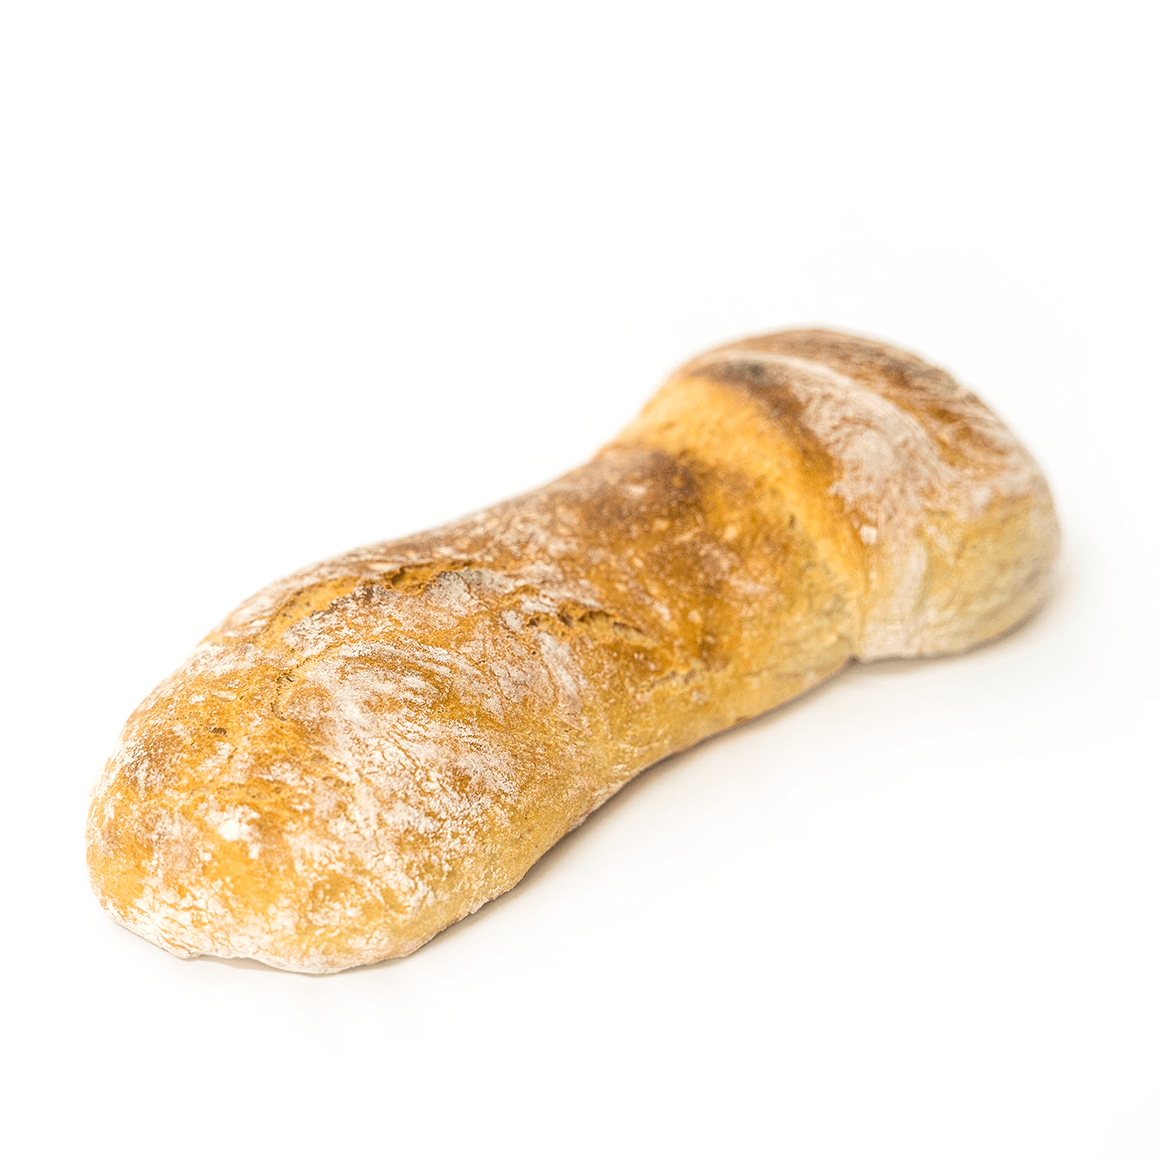 pao-mafra-padaria-pastelaria-entrega-casa-cale-confeitaria-tradicional-portuguesa-peniche-caldas-rainha-padaria-pastelaria